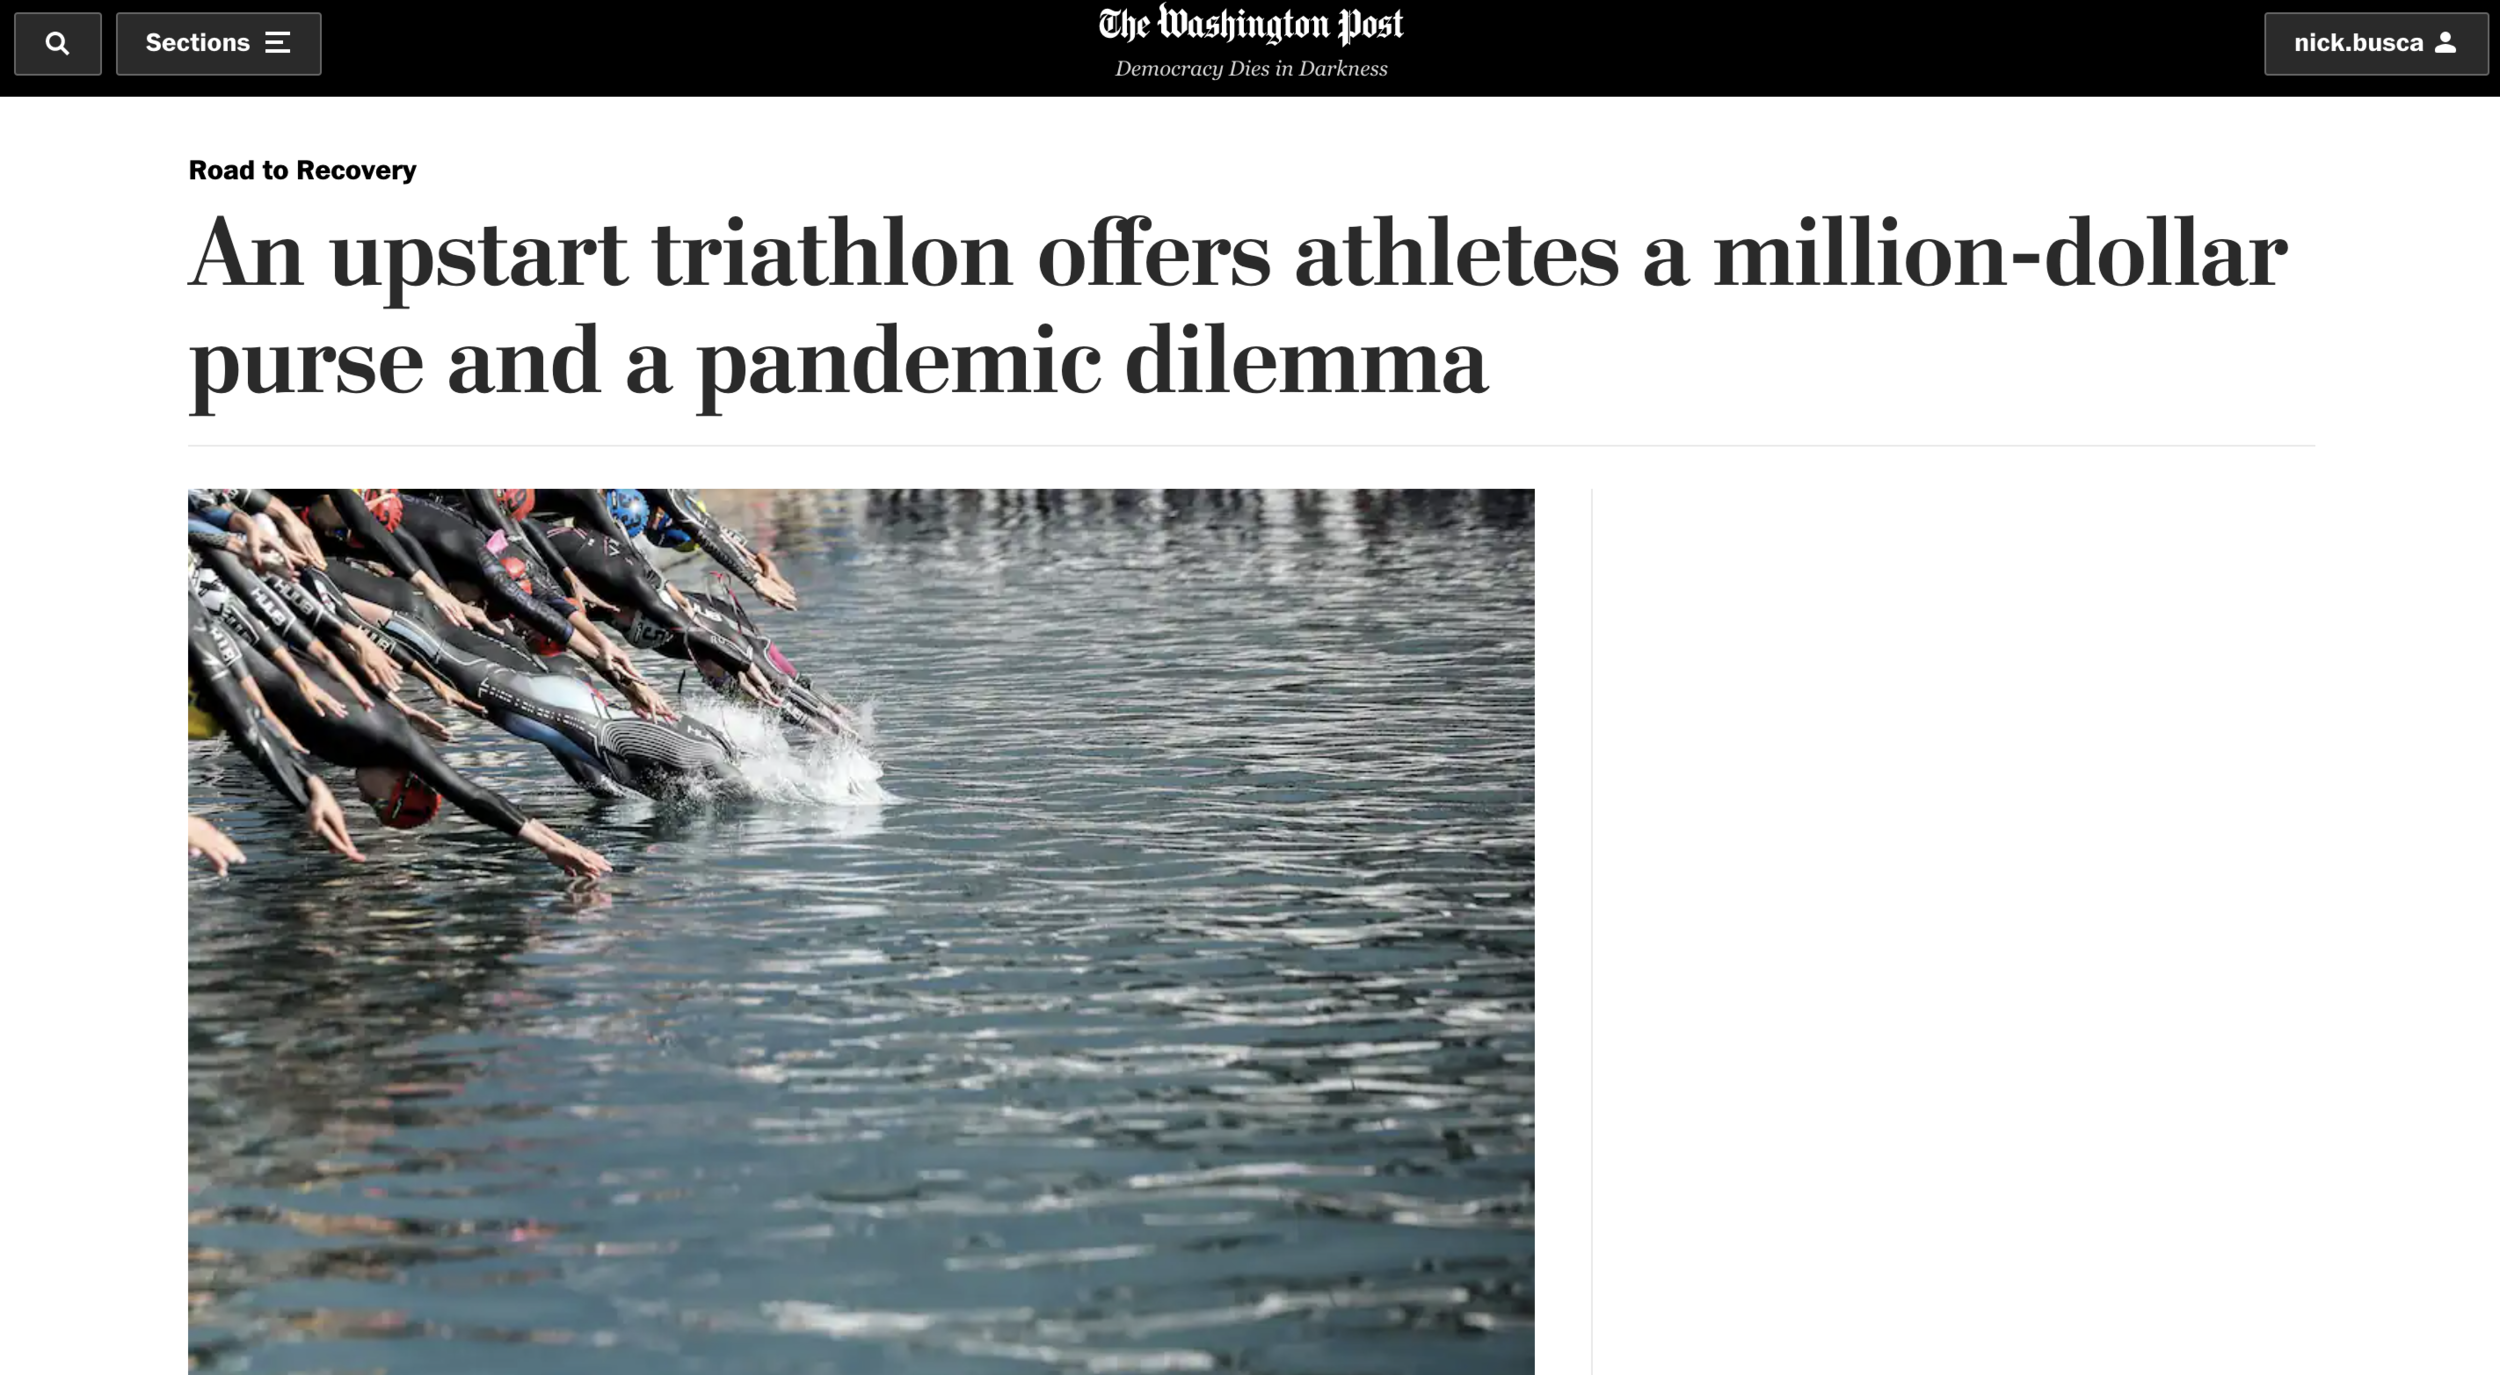 An upstart triathlon offers athletes a million-dollar purse and a pandemic dilemma